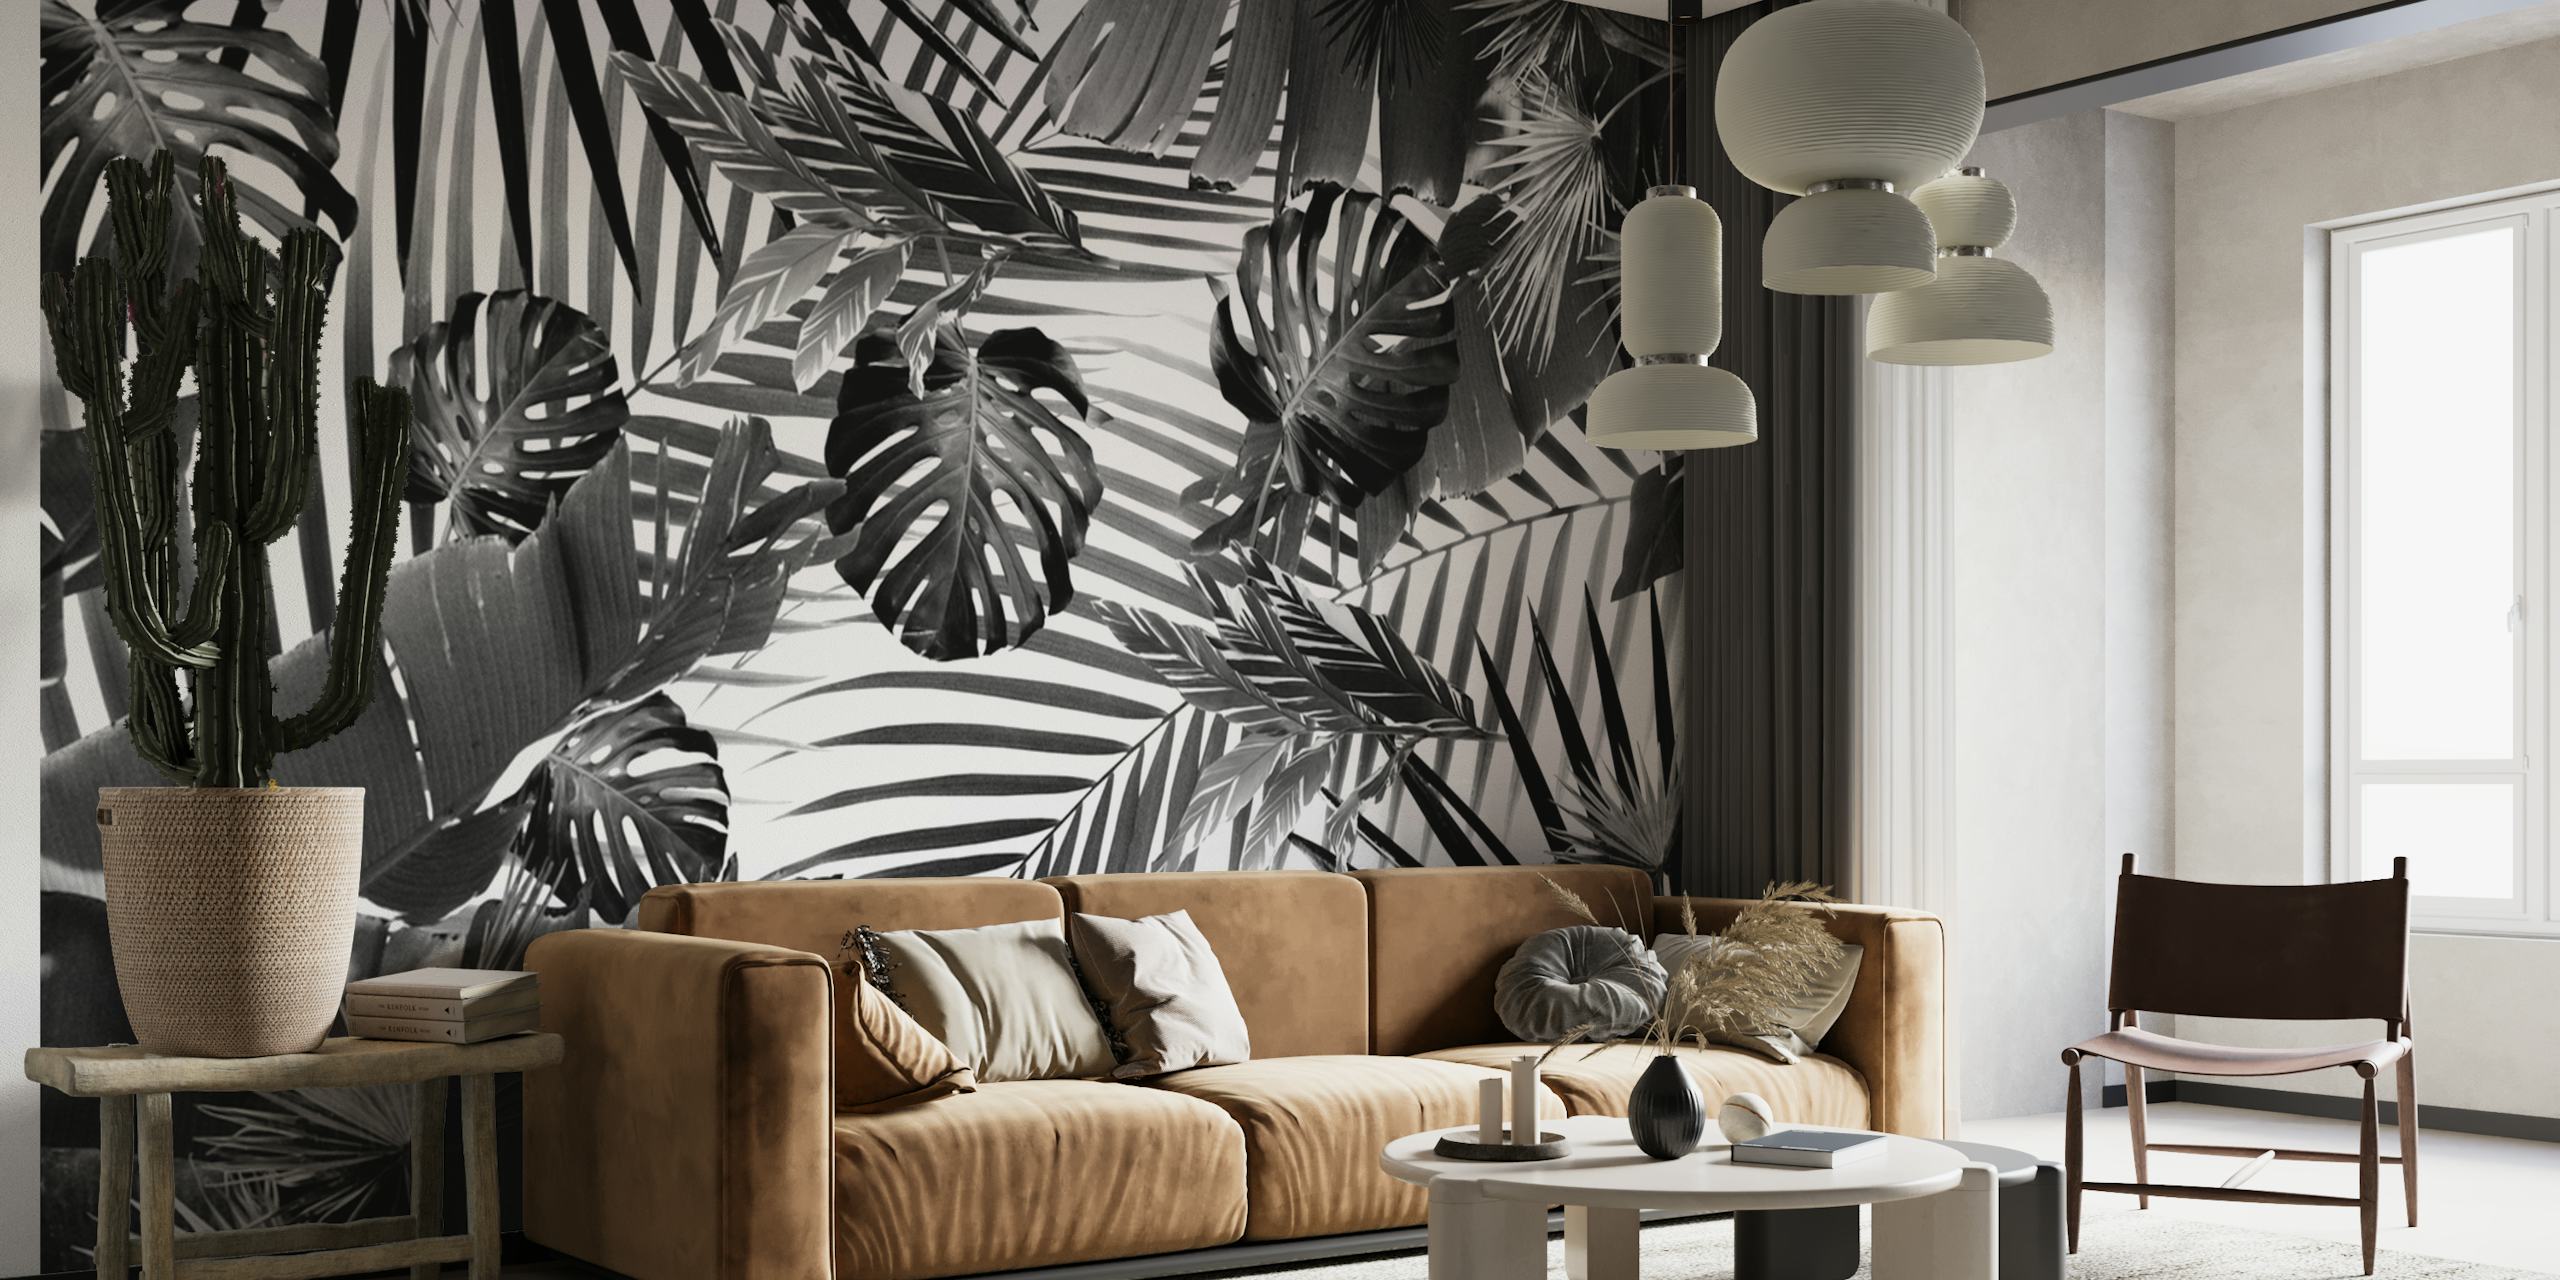 Tropical Jungle Siesta 4 wallpaper